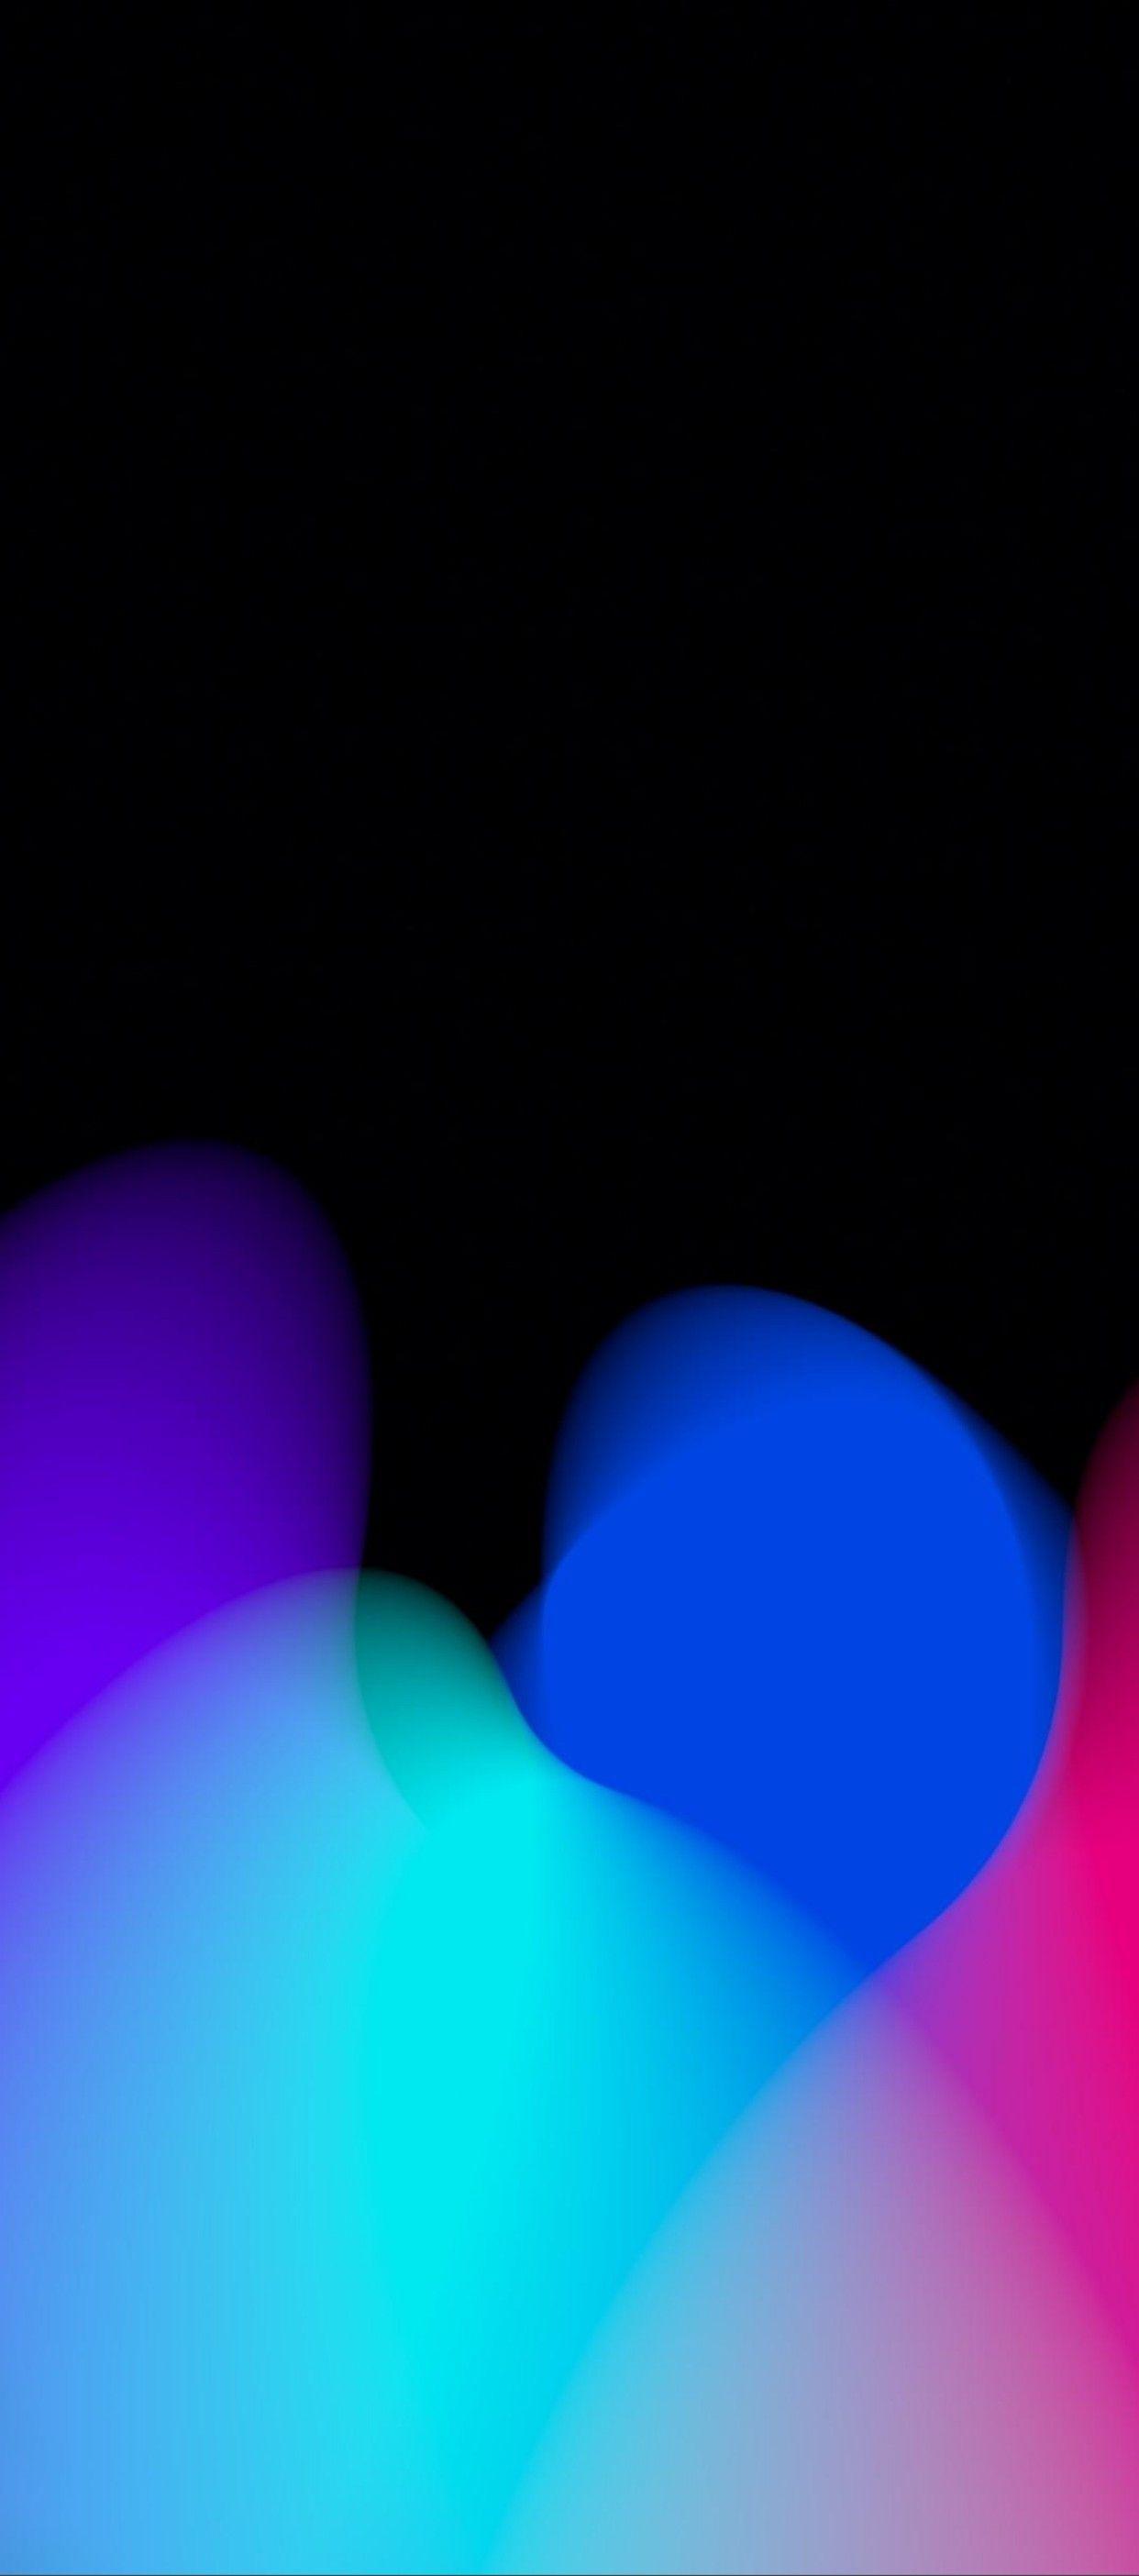 iOS 11, iPhone X, black, red, purple, blue, clean, simple